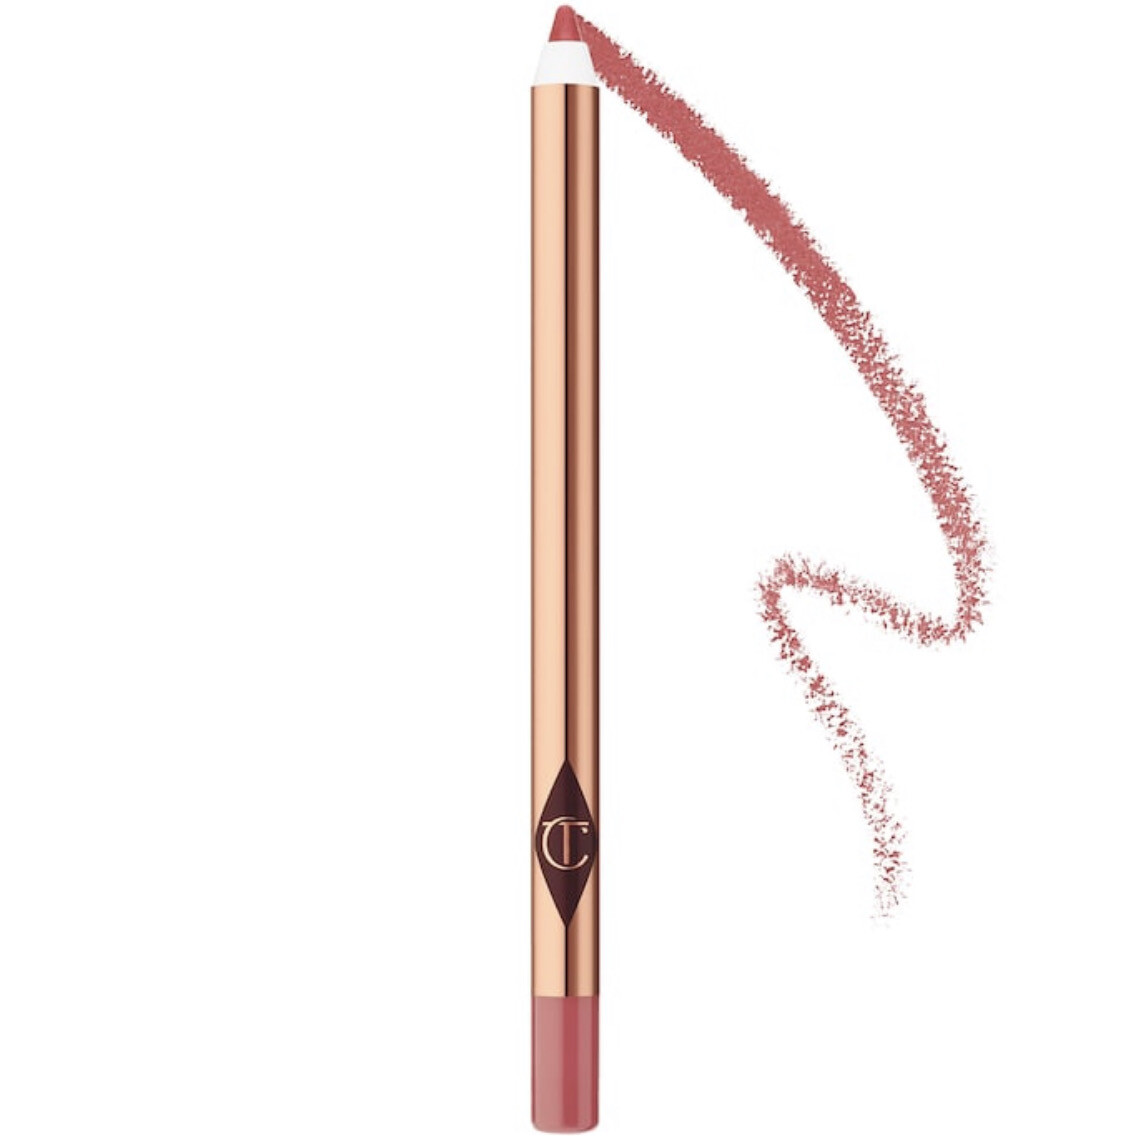 Charlotte Tilbury - Lip Cheat Lip Liner | Supersize Me - neutral nude pink